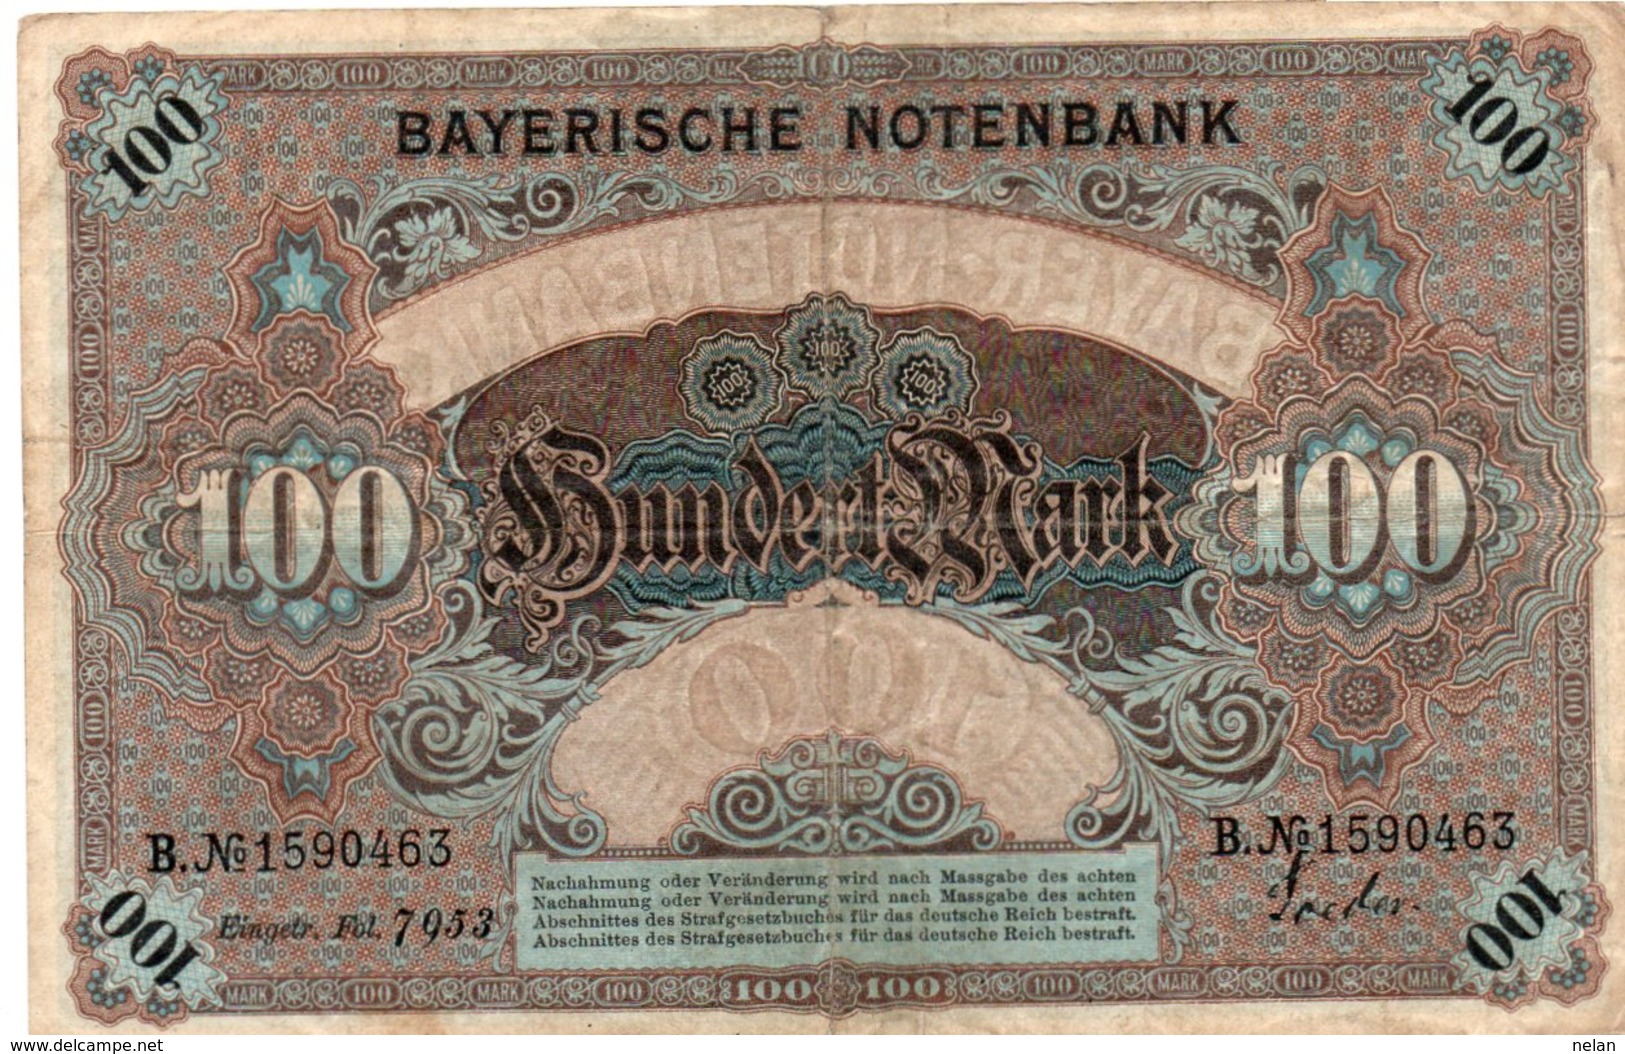 GERMANIA 100 MARK 1900-Bayerische Notenbank--P-S922 - 100 Mark